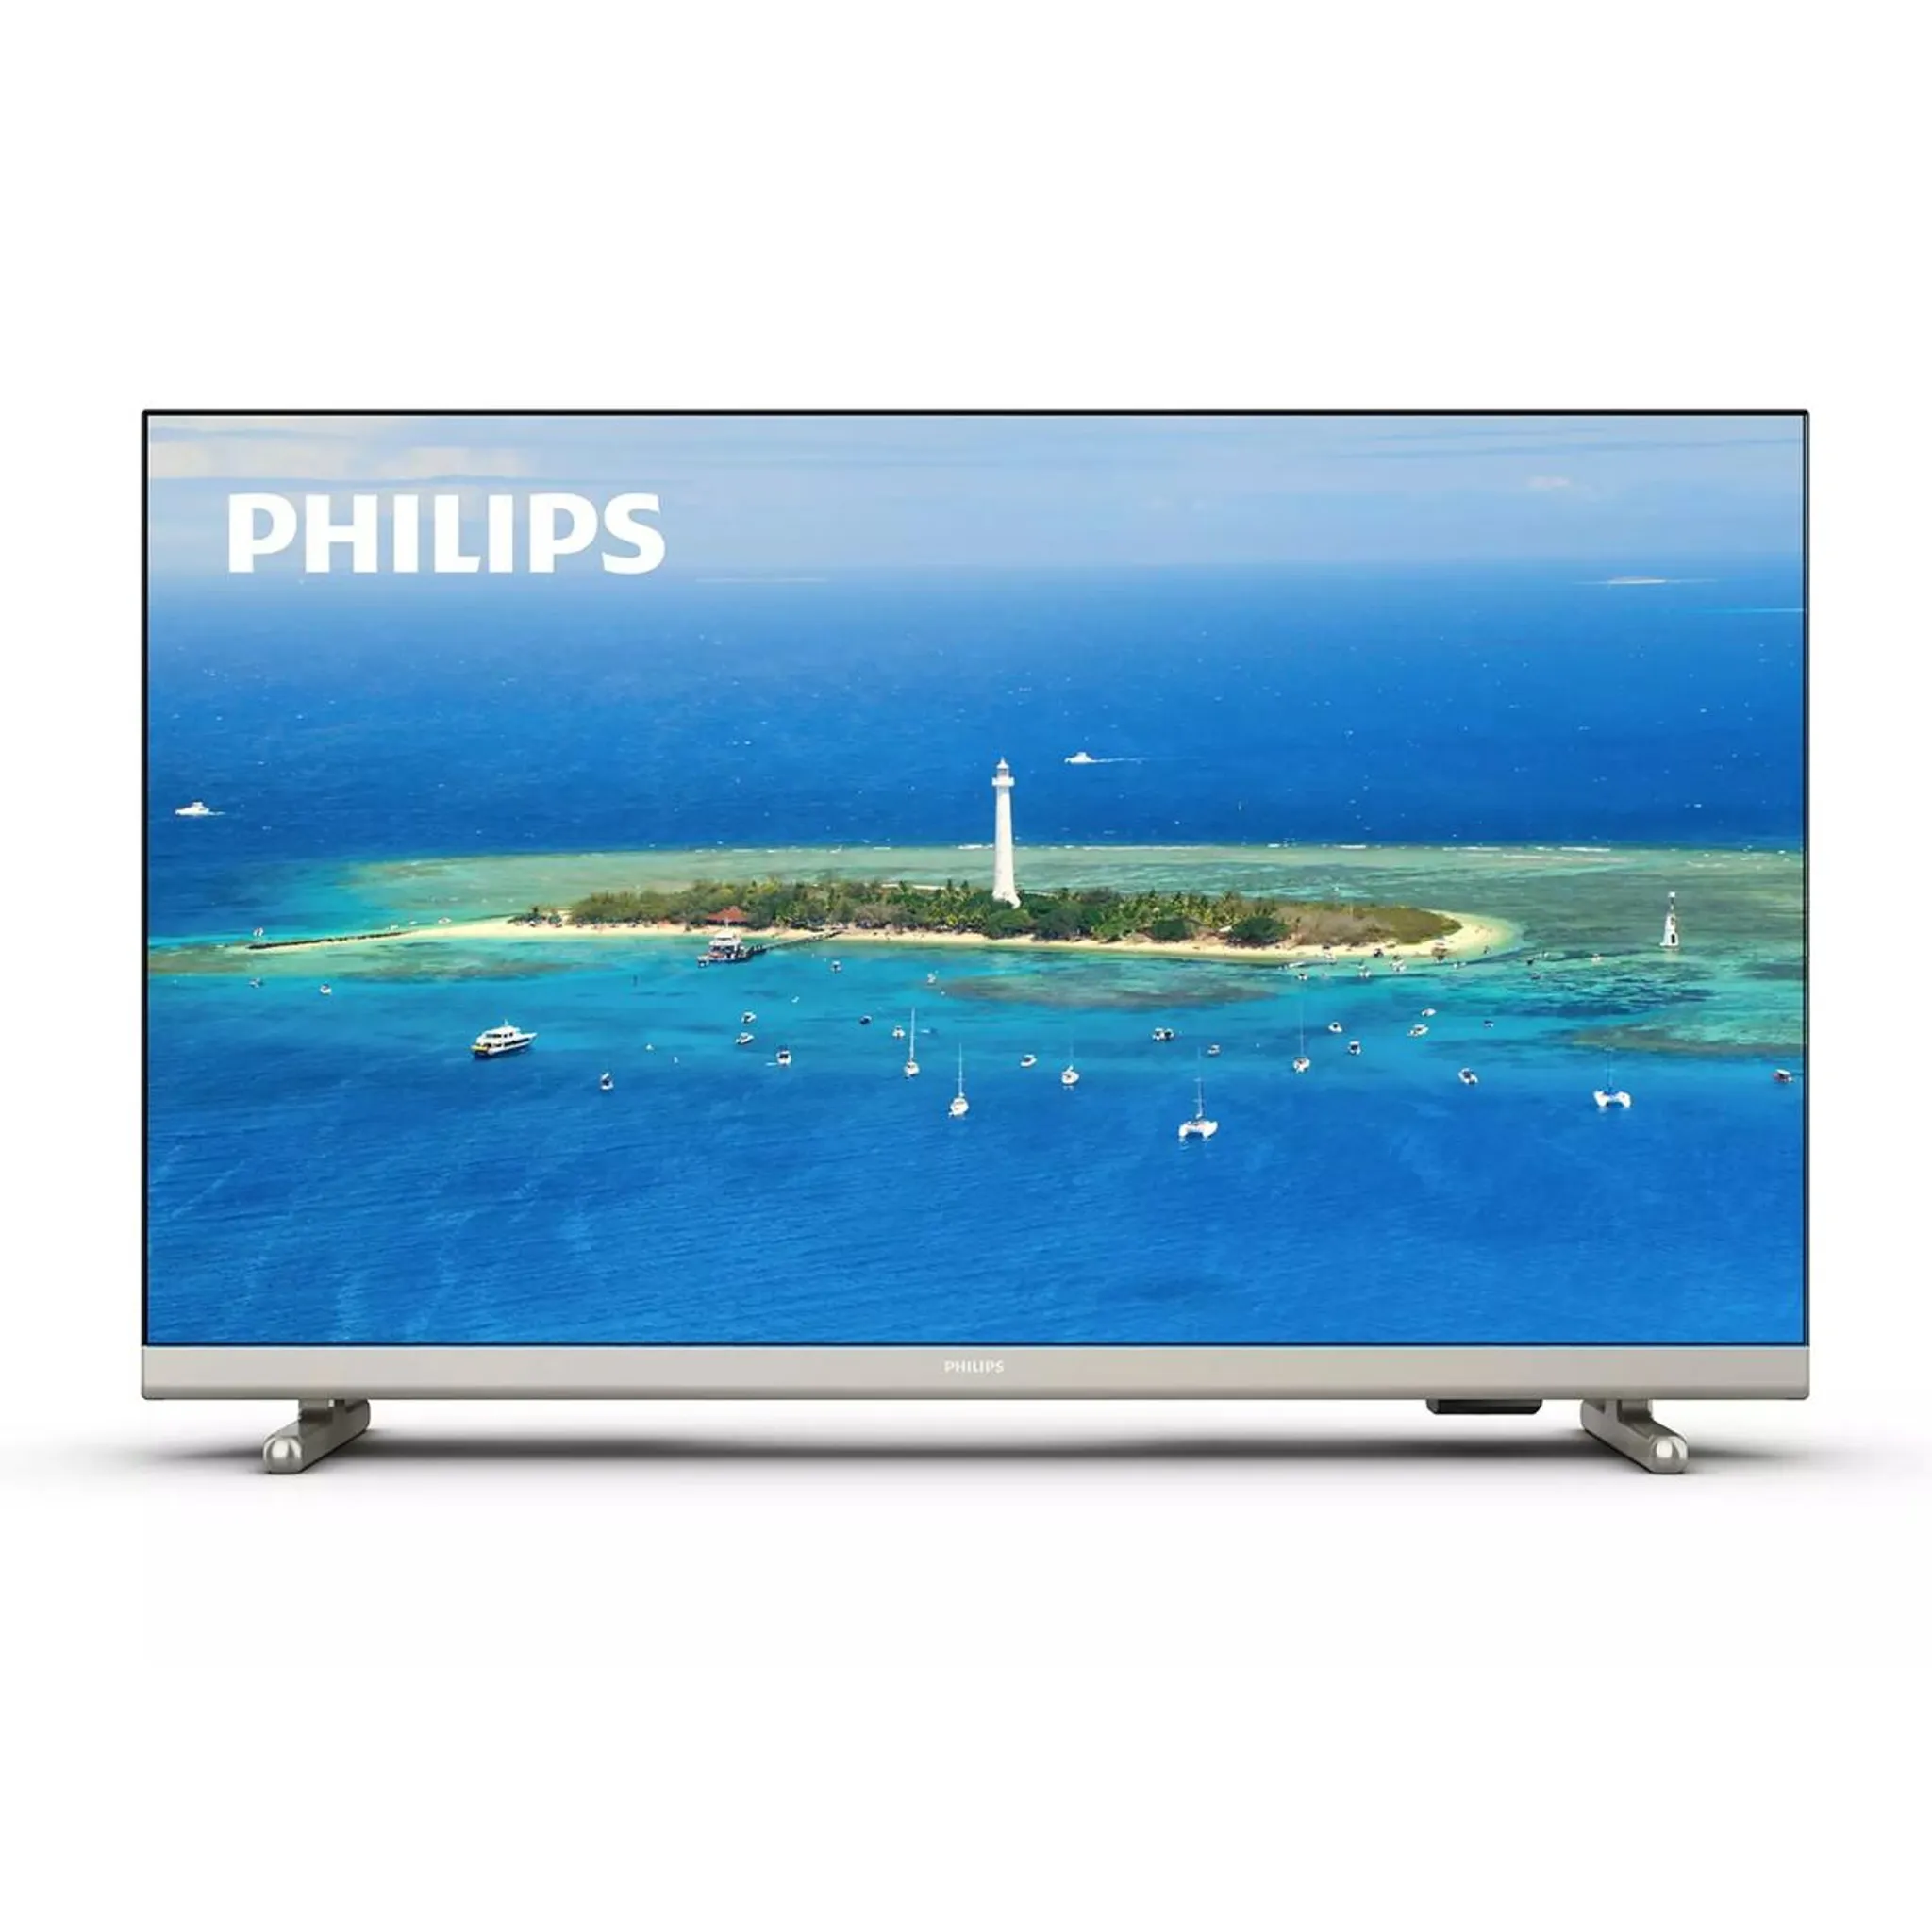 PHILIPS Fernseher 32PHS5527/12 LED HD 32 TV